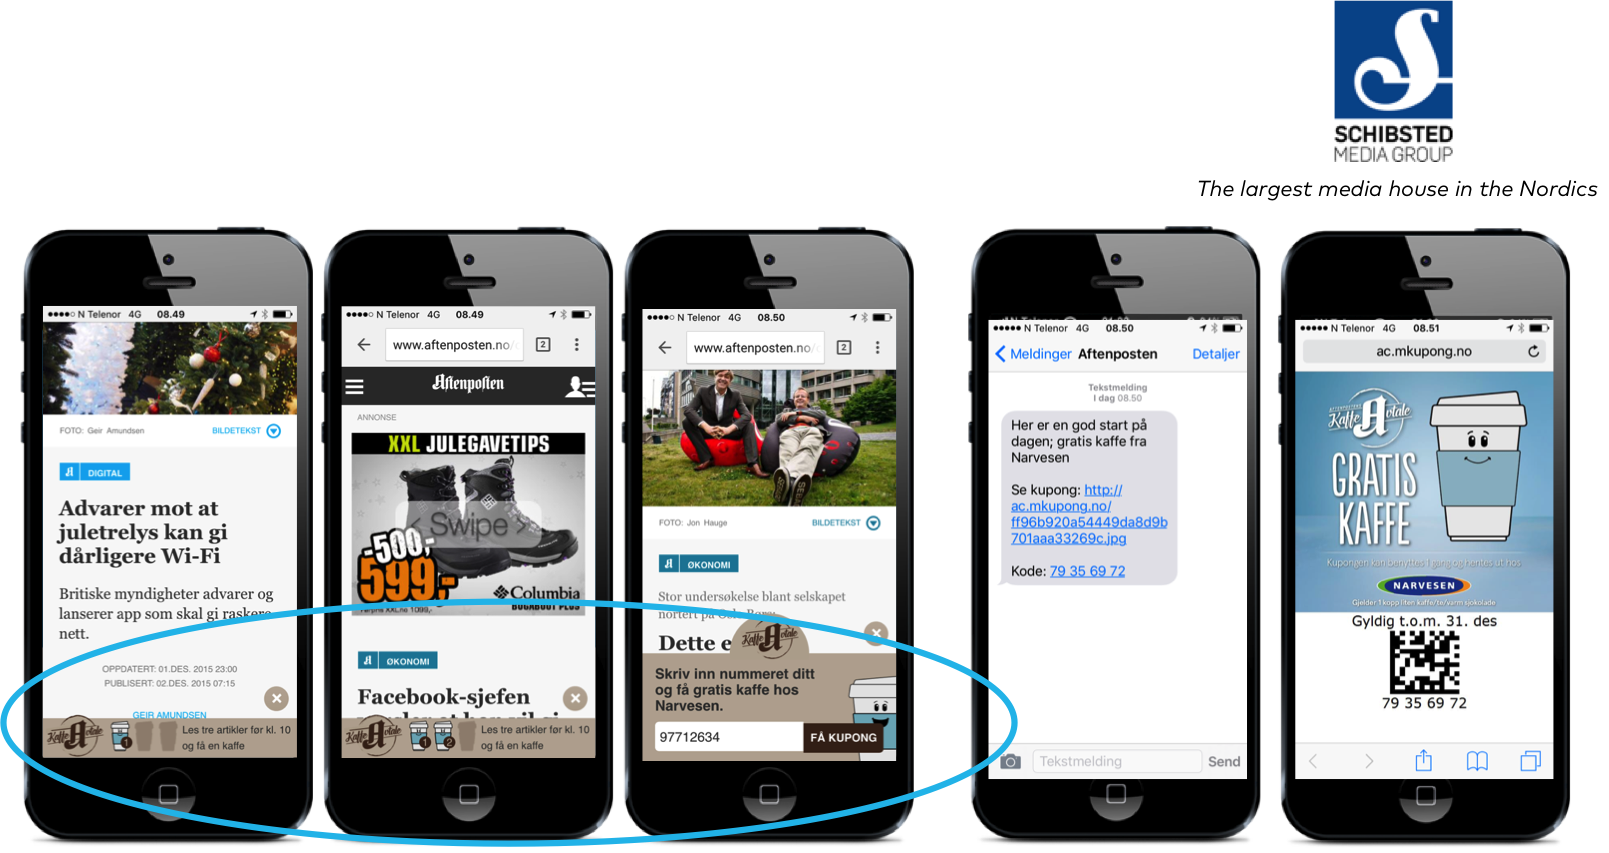 free coffee mobile voucher via SMS